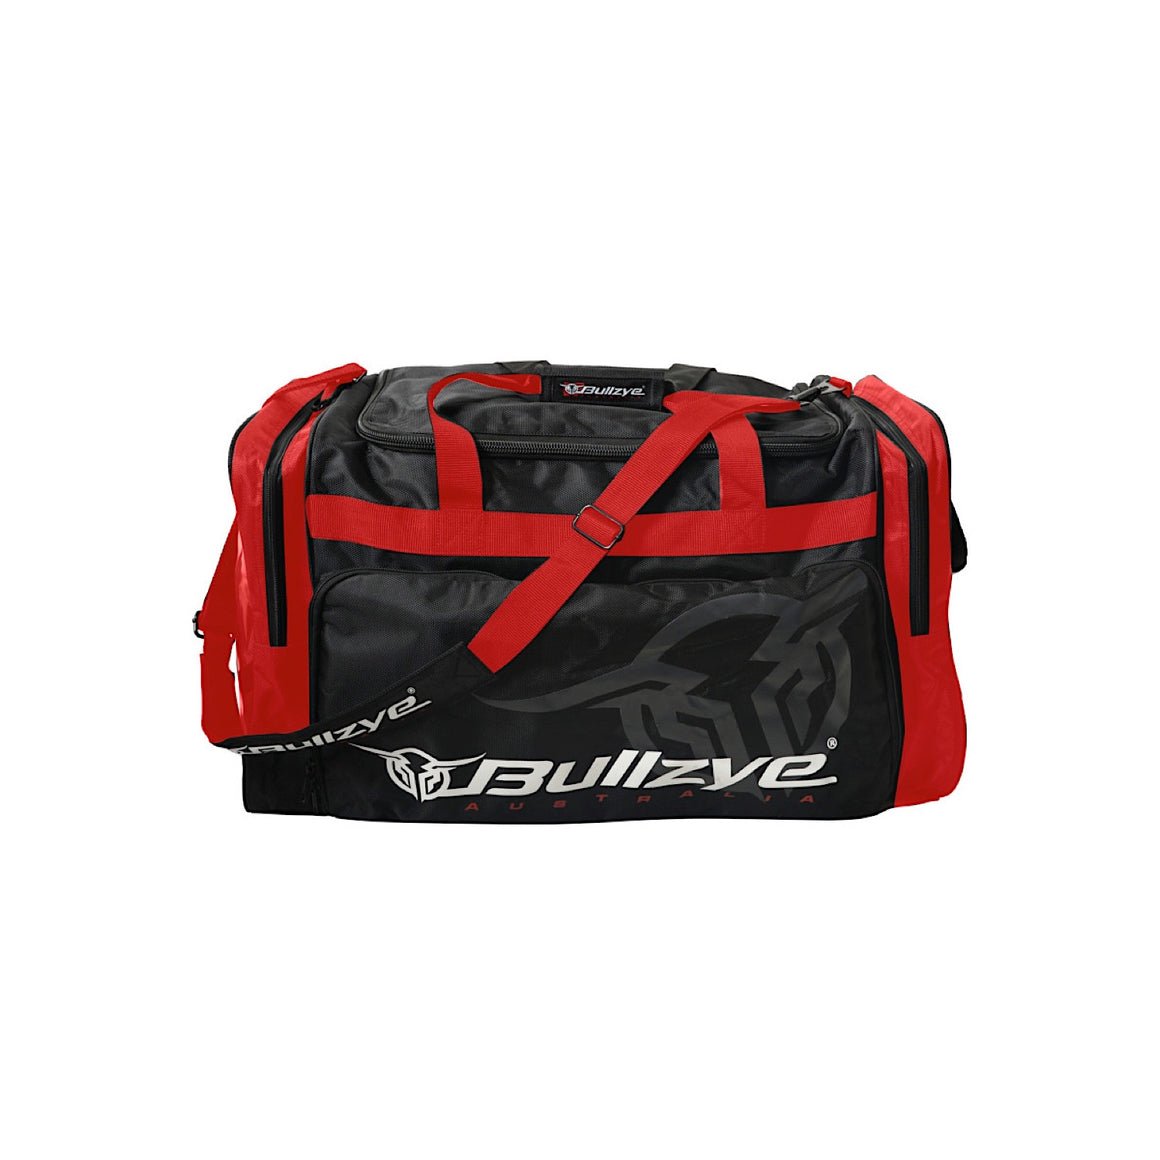 Bullzye Axle Large Gear Bag - Red/Black